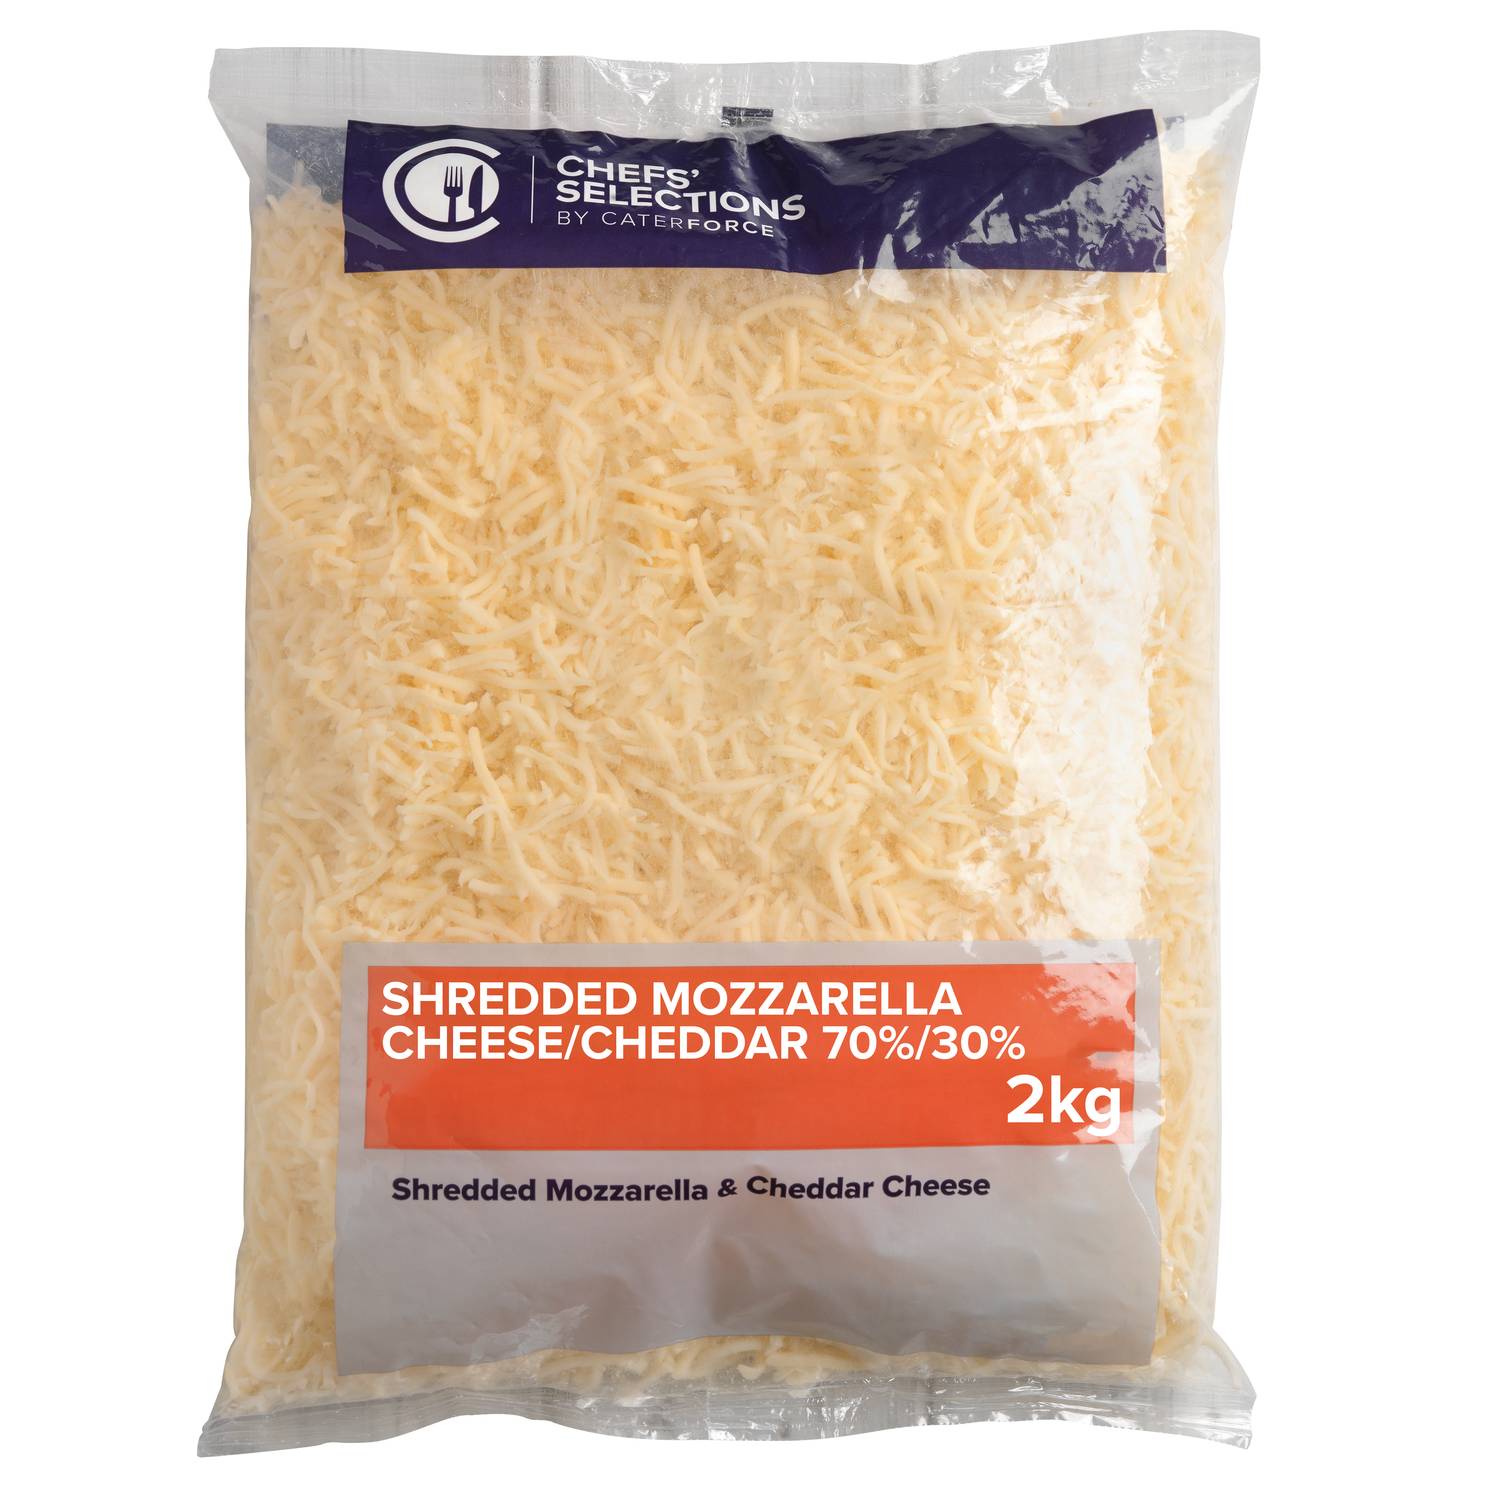 Chefs’ Selections Shredded Mozzarella & Cheddar Cheese Blend (6 x 2kg)